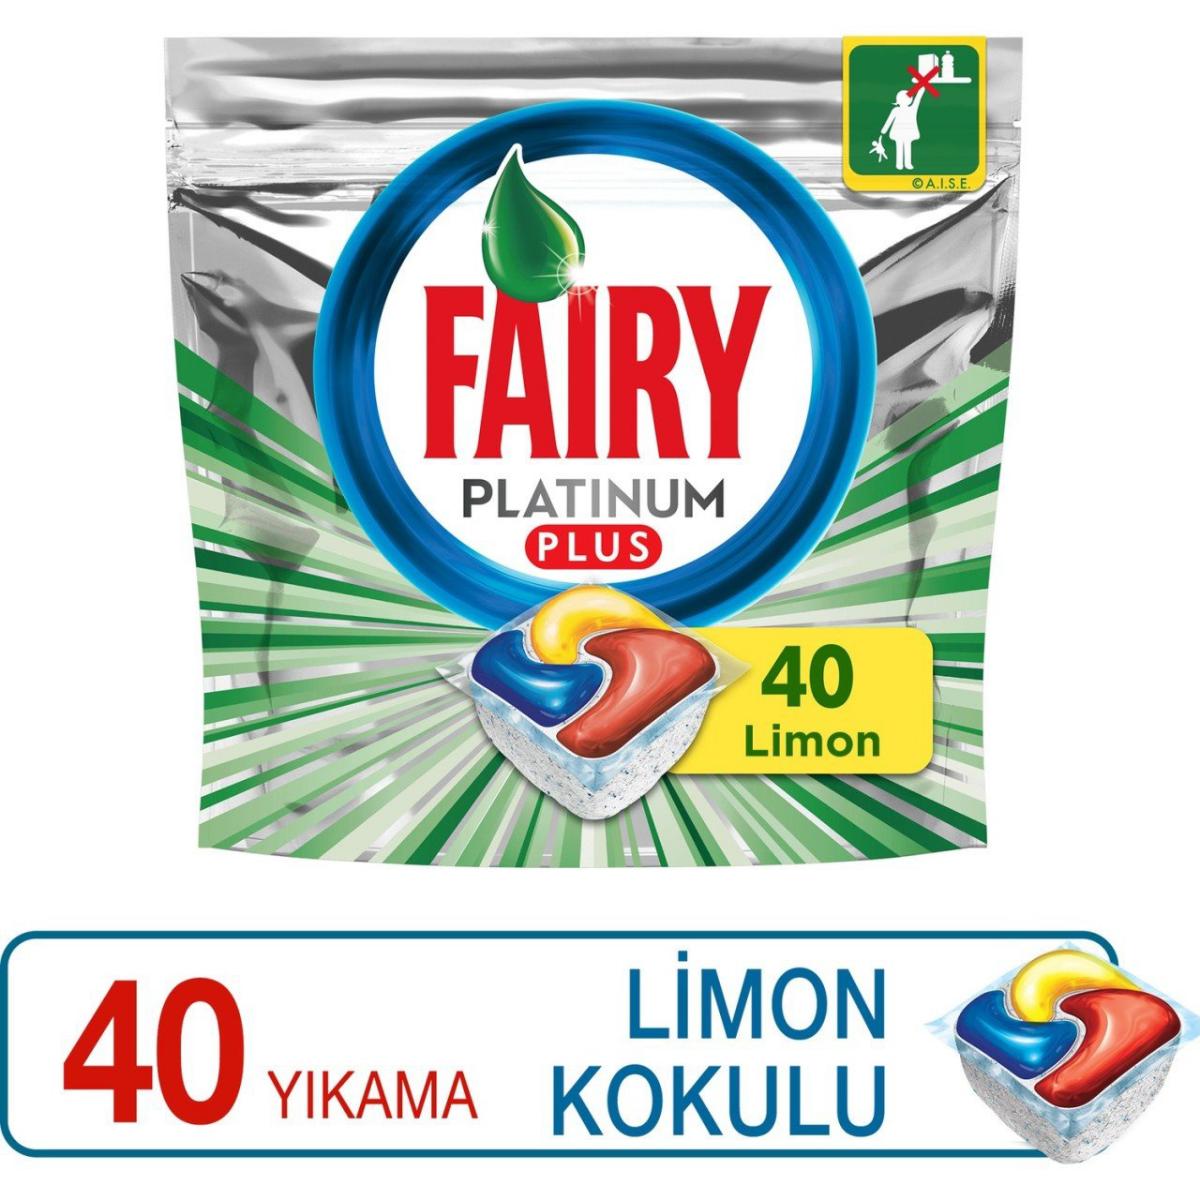 Fairy Platinum Plus Limon Kokulu Tablet Bulaşık Makinesi Deterjanı 40 Adet